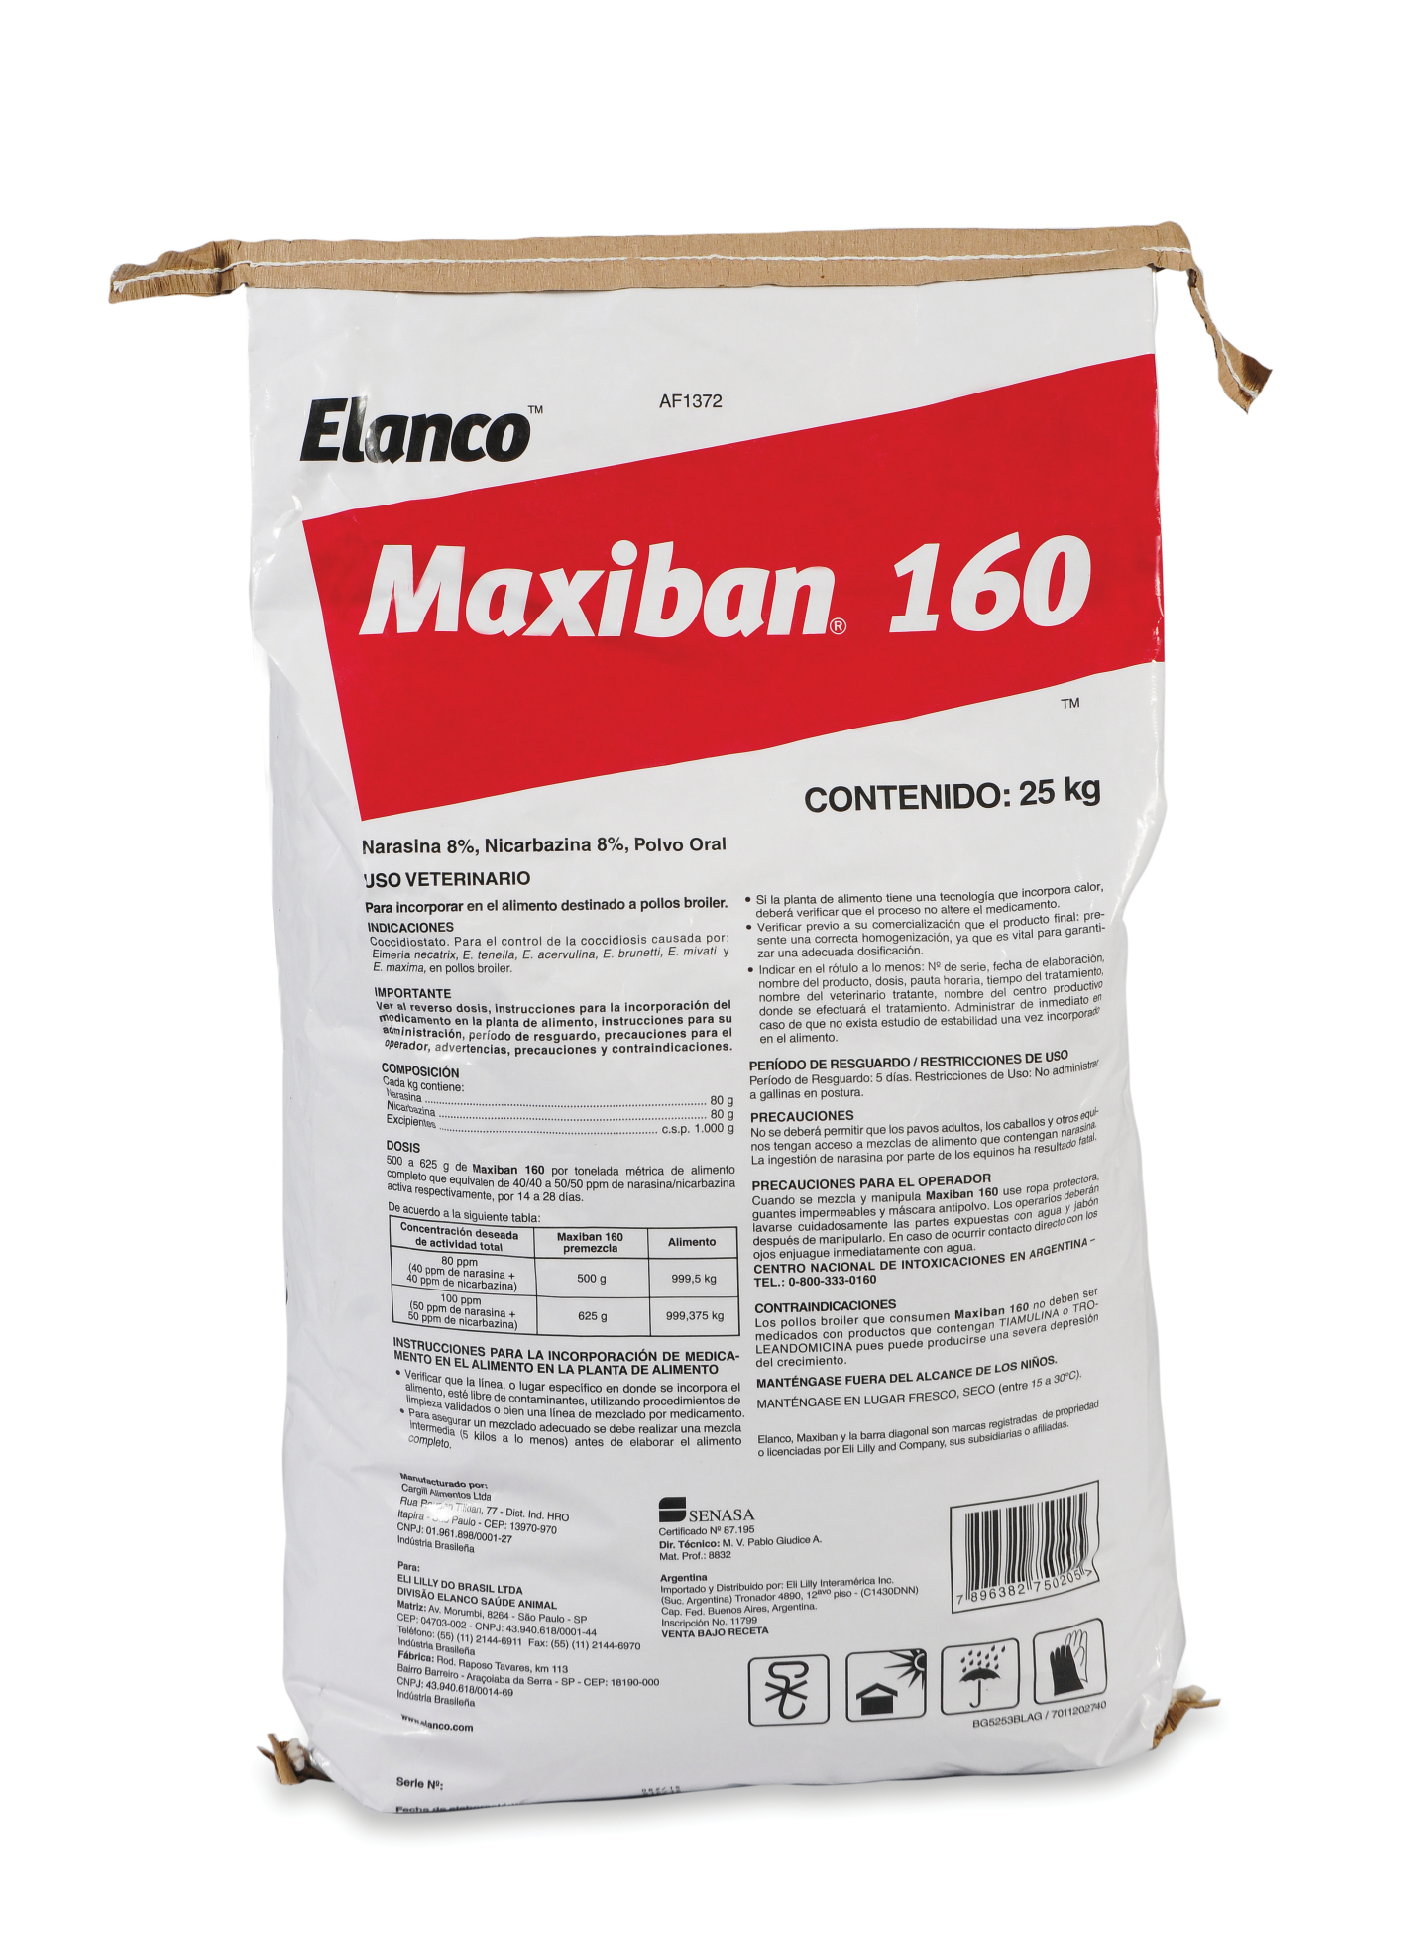 Maxiban packaging 